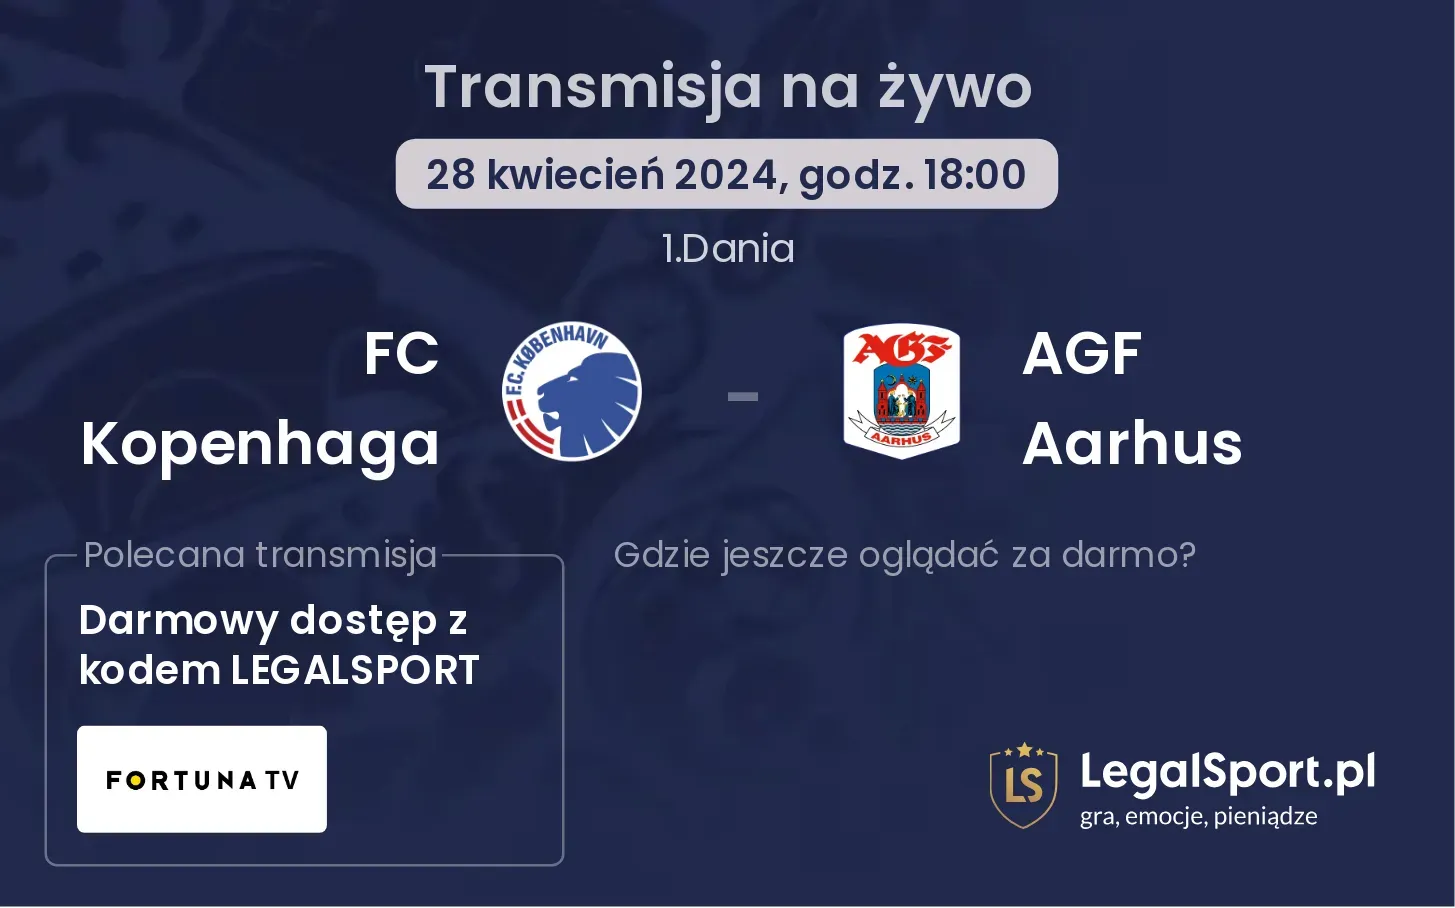 FC Kopenhaga - AGF Aarhus transmisja na żywo